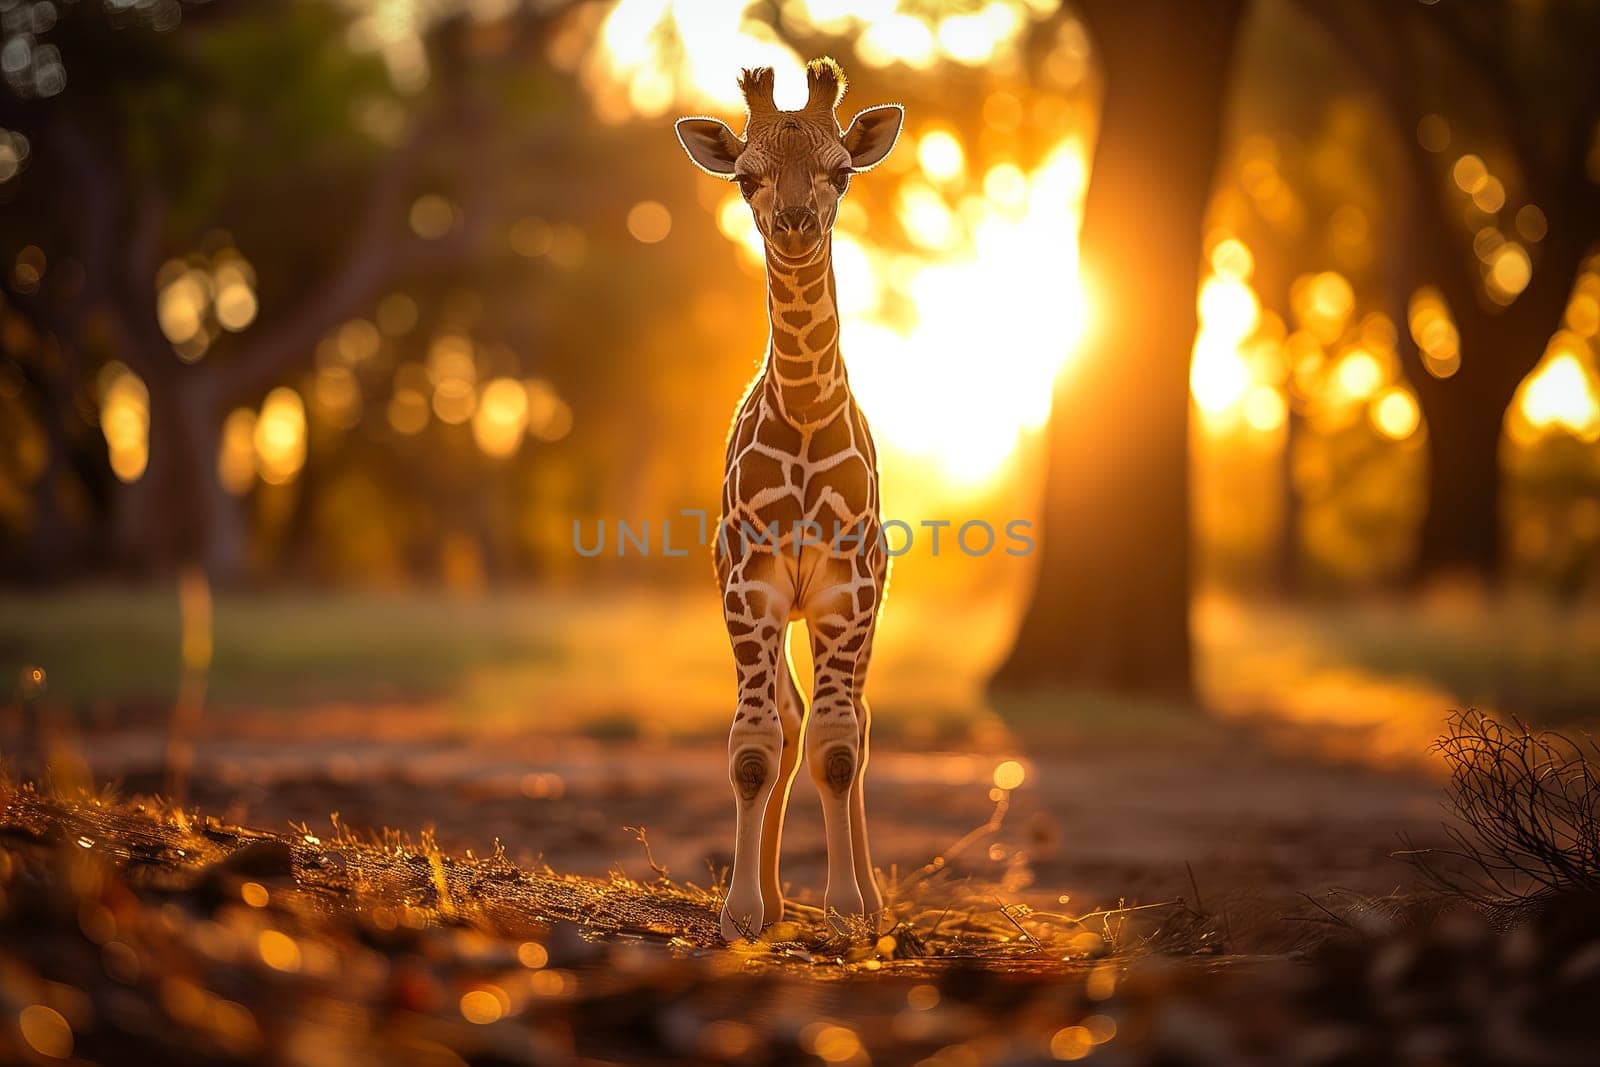 Baby Giraffe in Golden Sunset by dimol